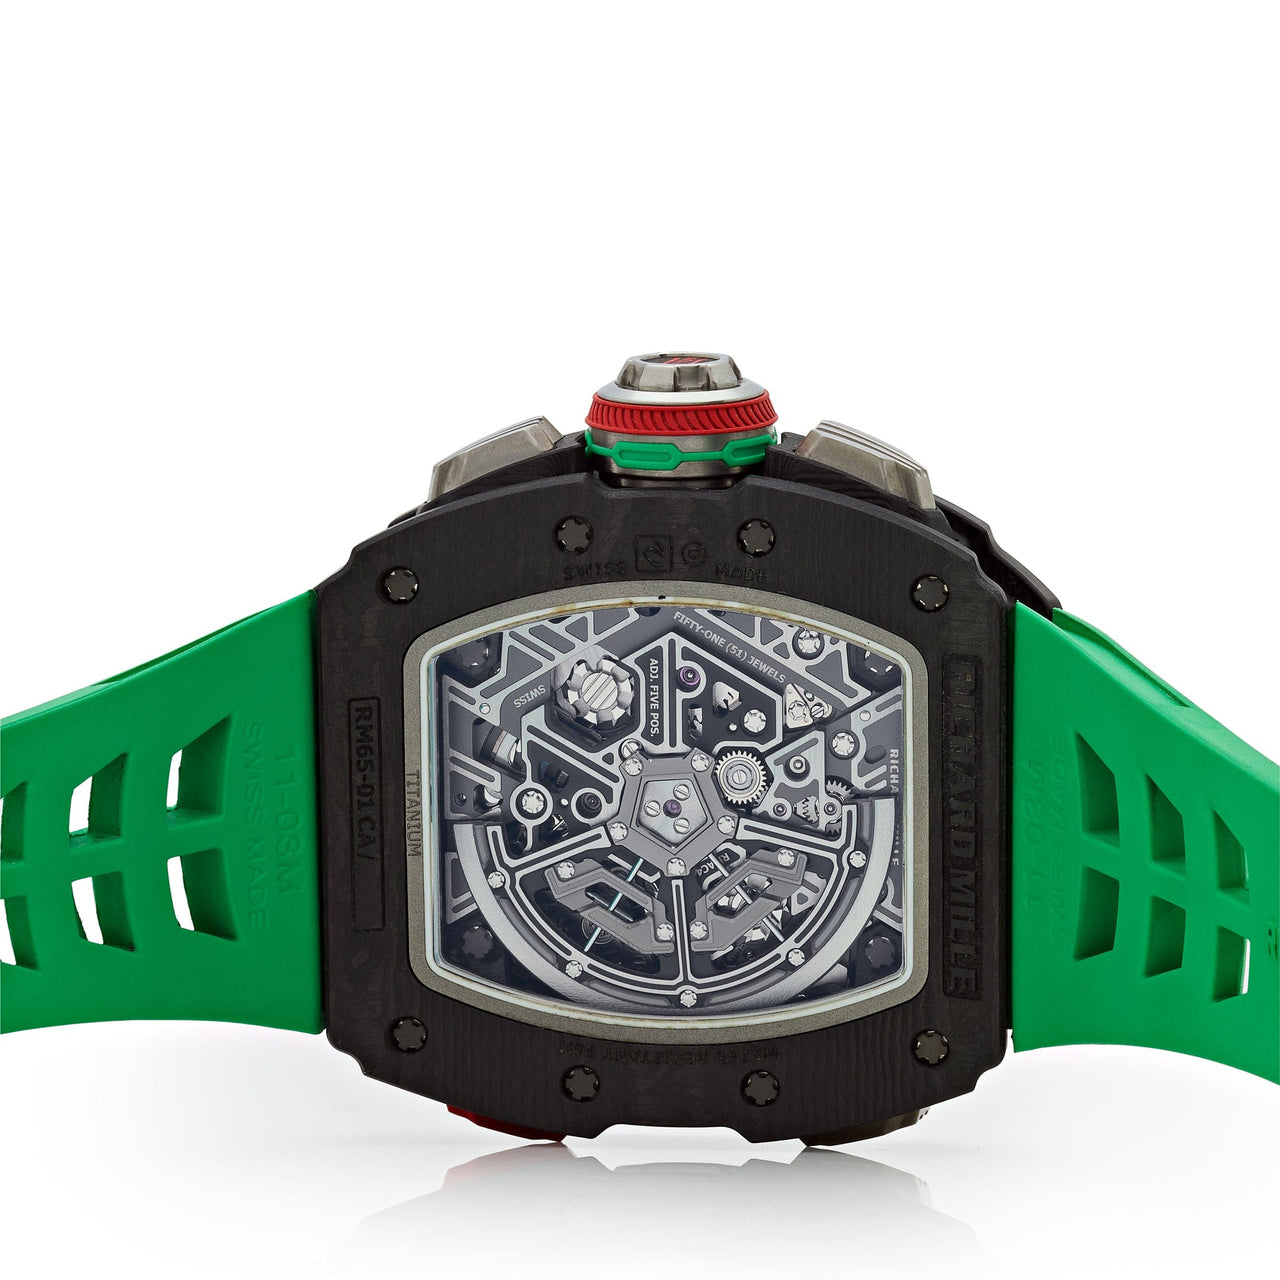 Richard Mille Automatic Winding Chronograph Carbon RM65-01 Wrist Aficionado